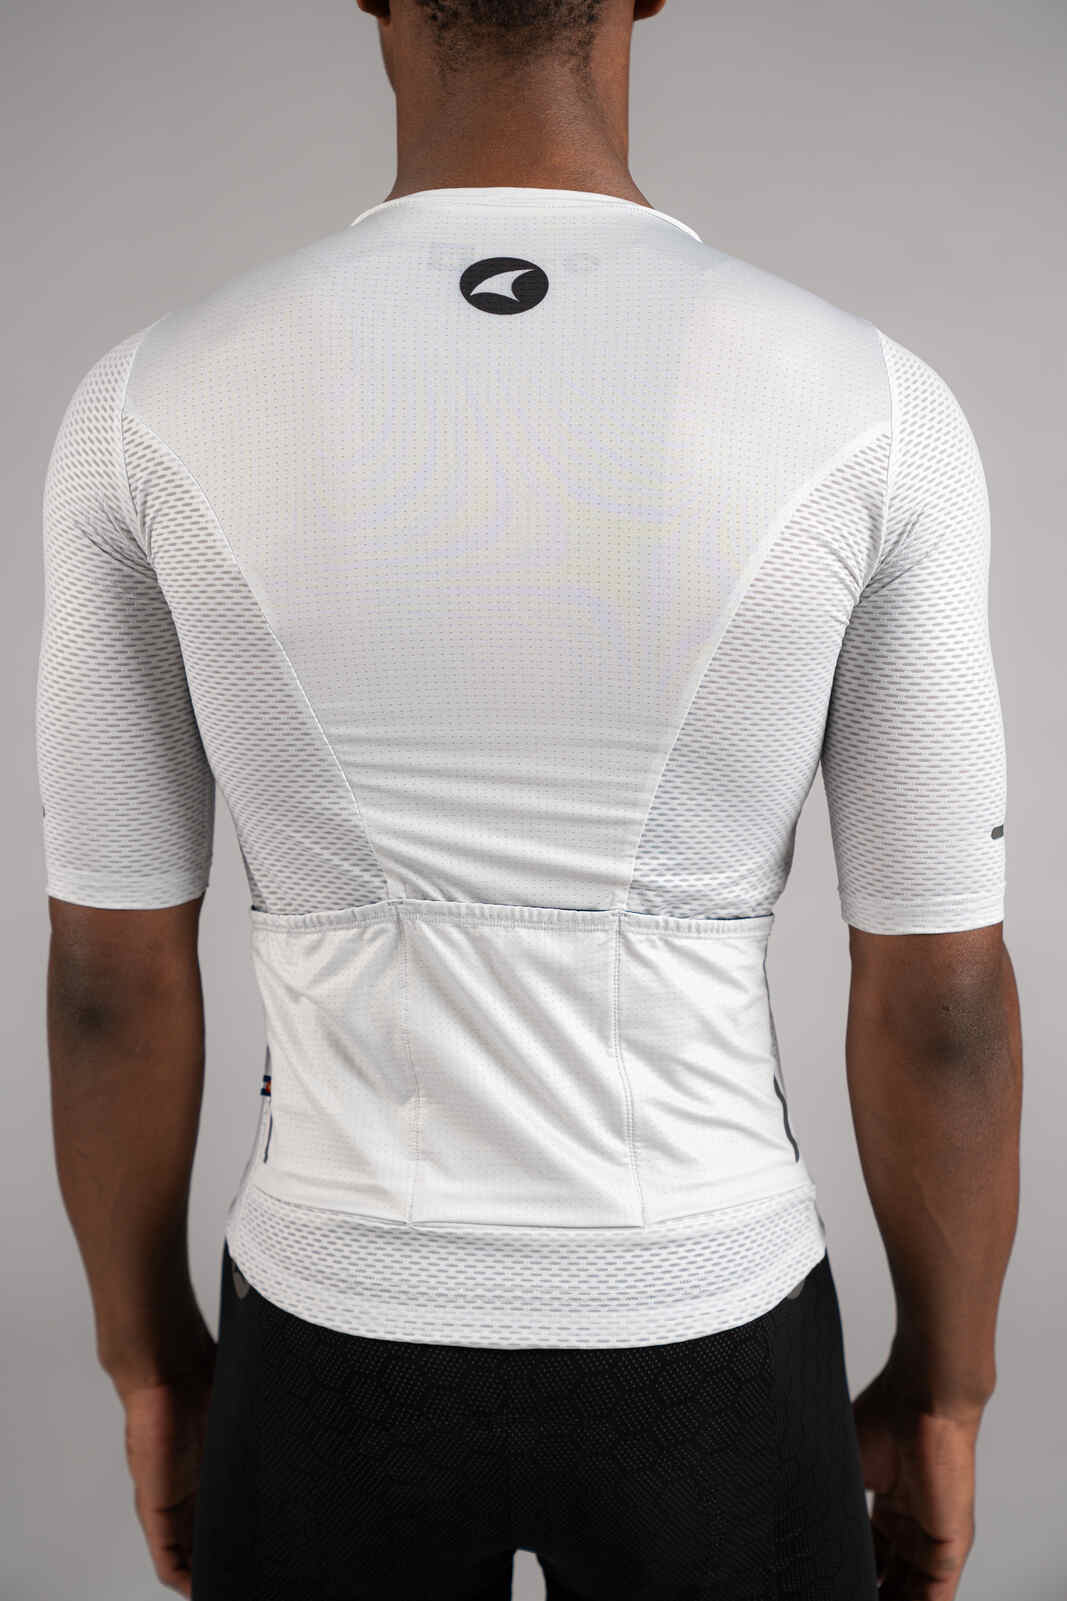 Men's White Mesh Cycling Jersey - Back Pockets